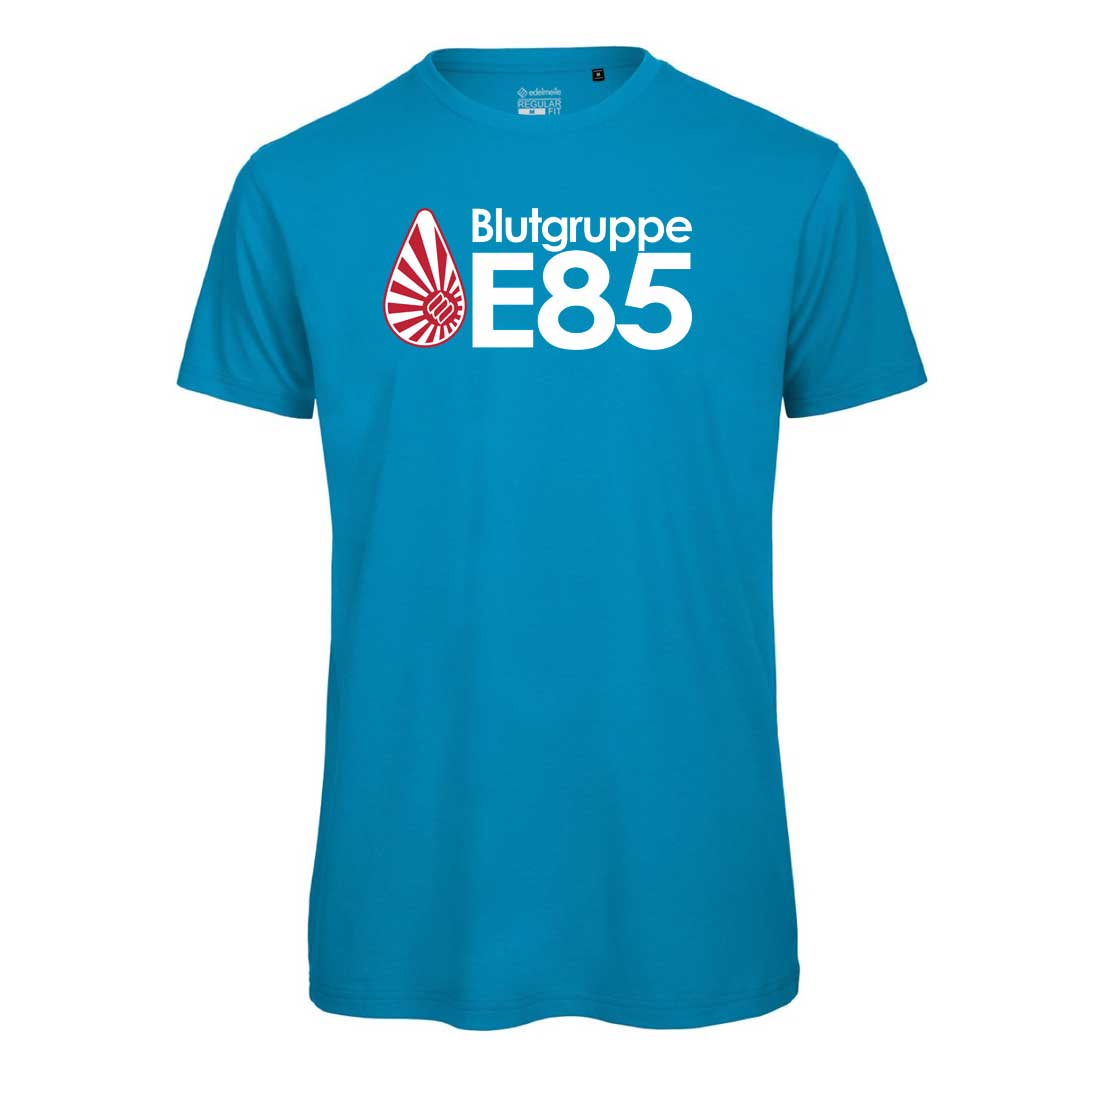 edelmeile "Blutgruppe E85" Herren T-Shirt